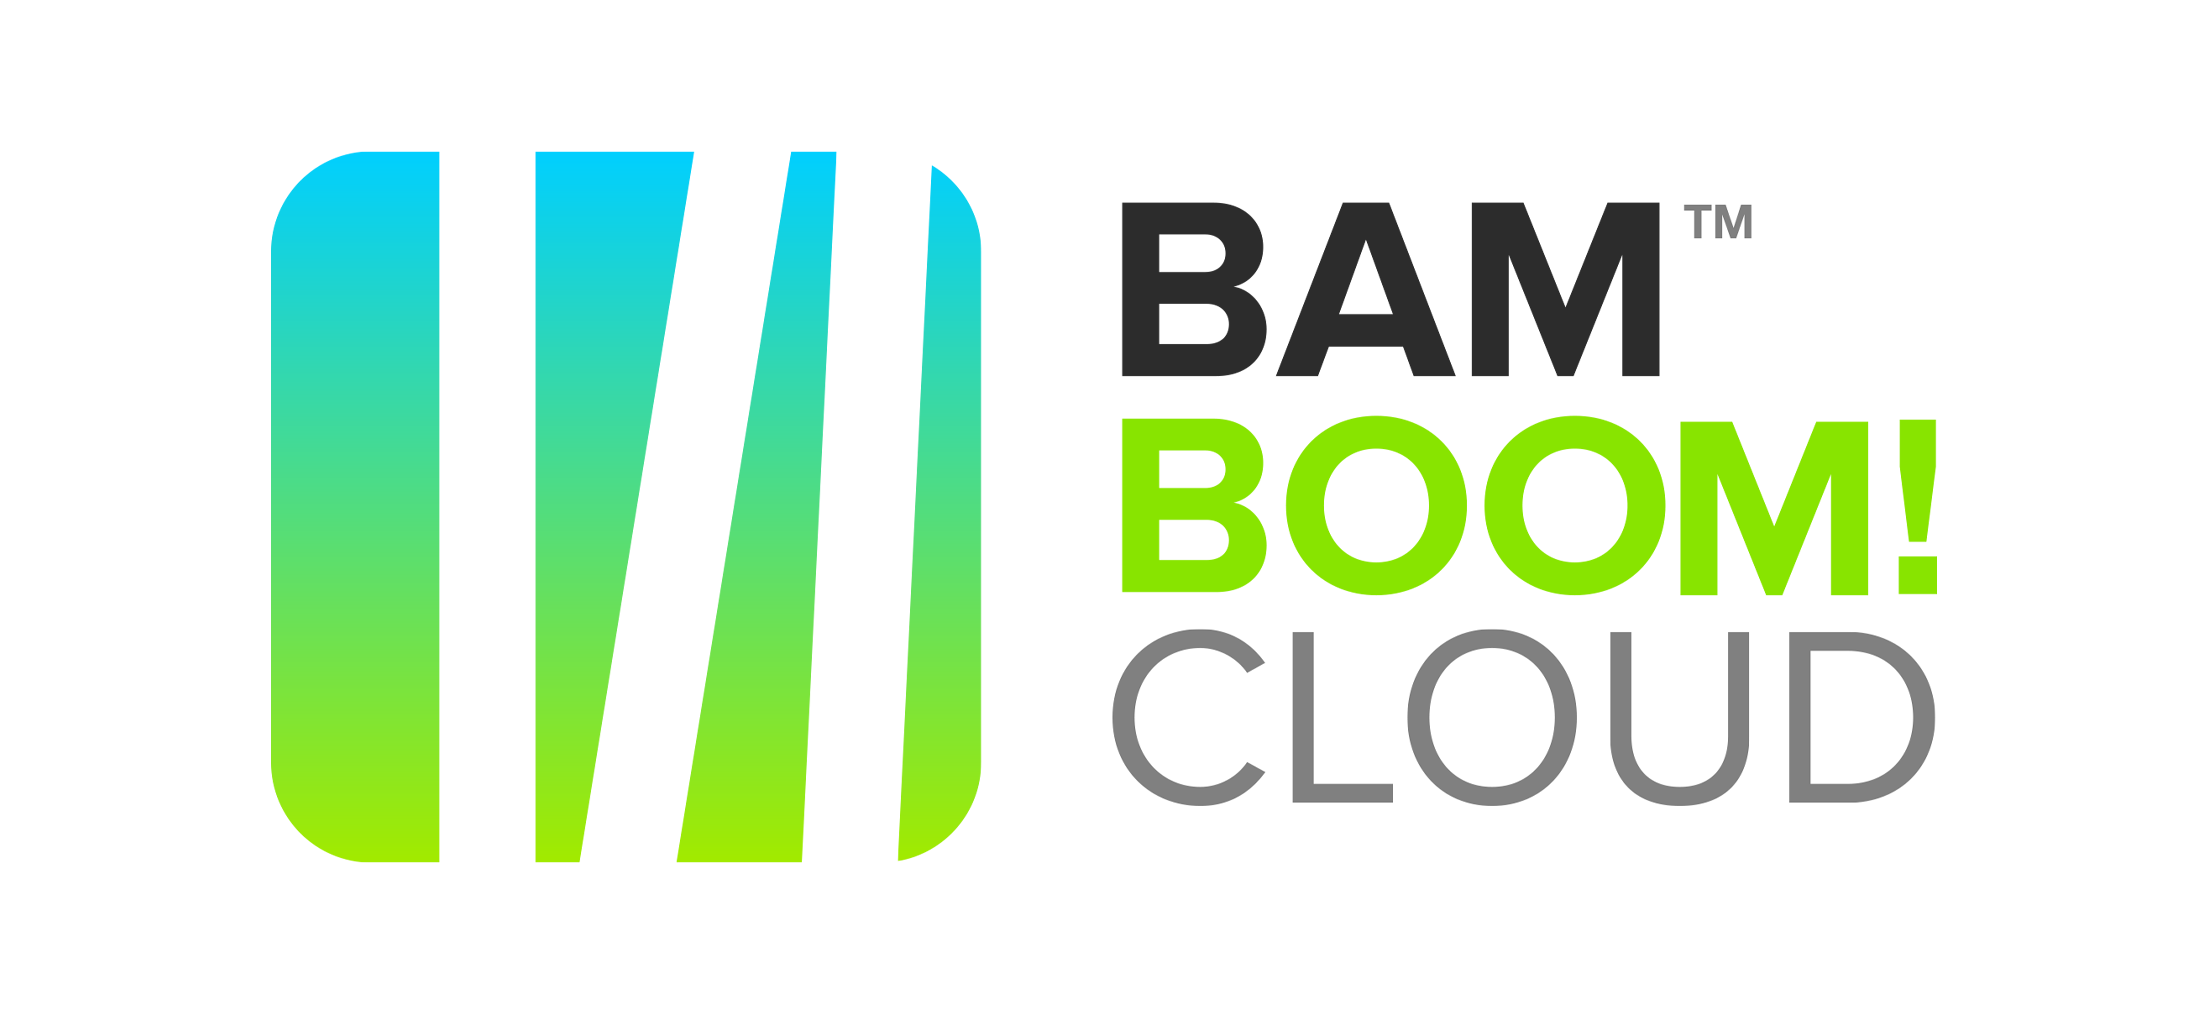 Bam Boom logo